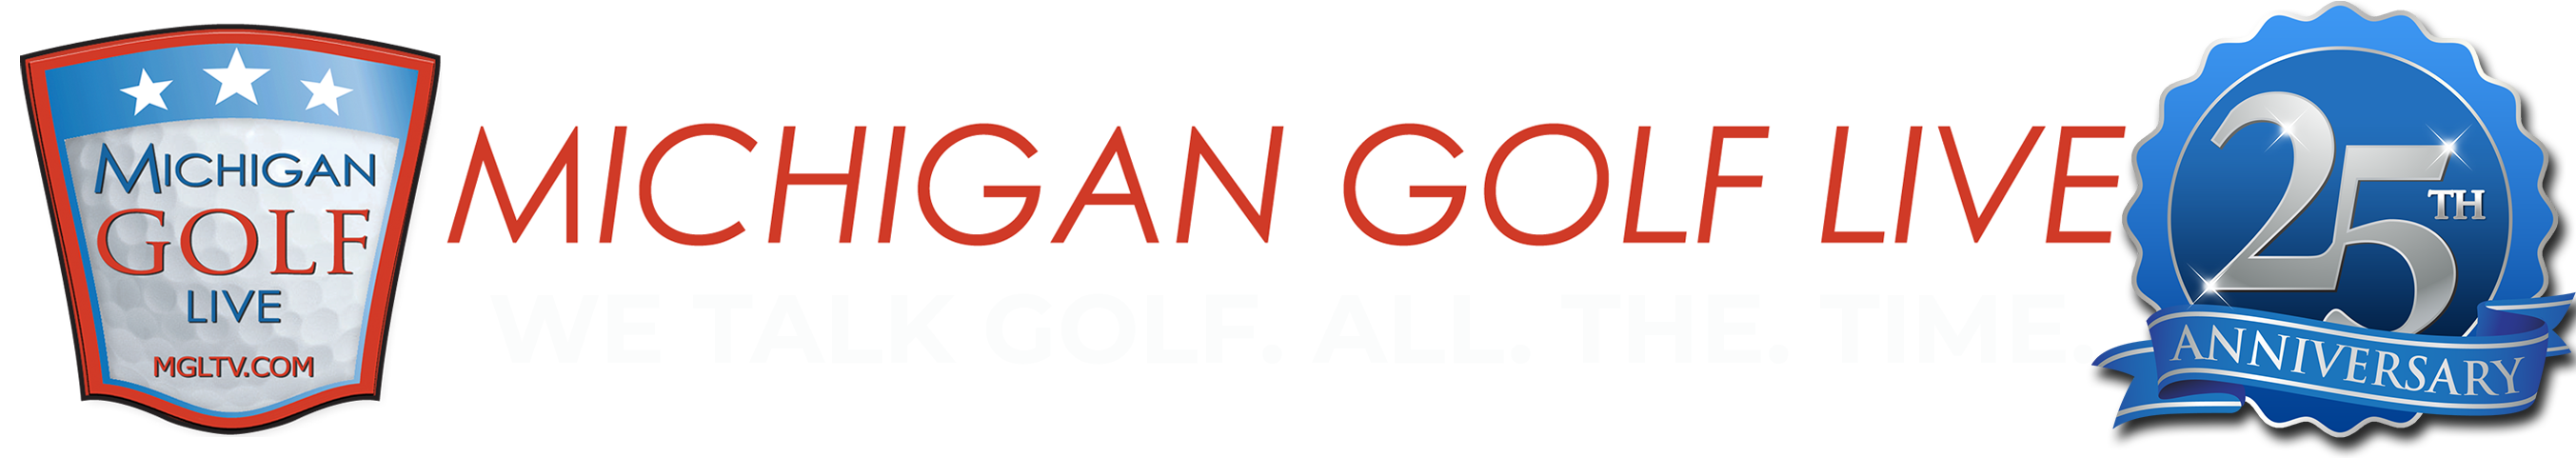 Michigan Golf Live